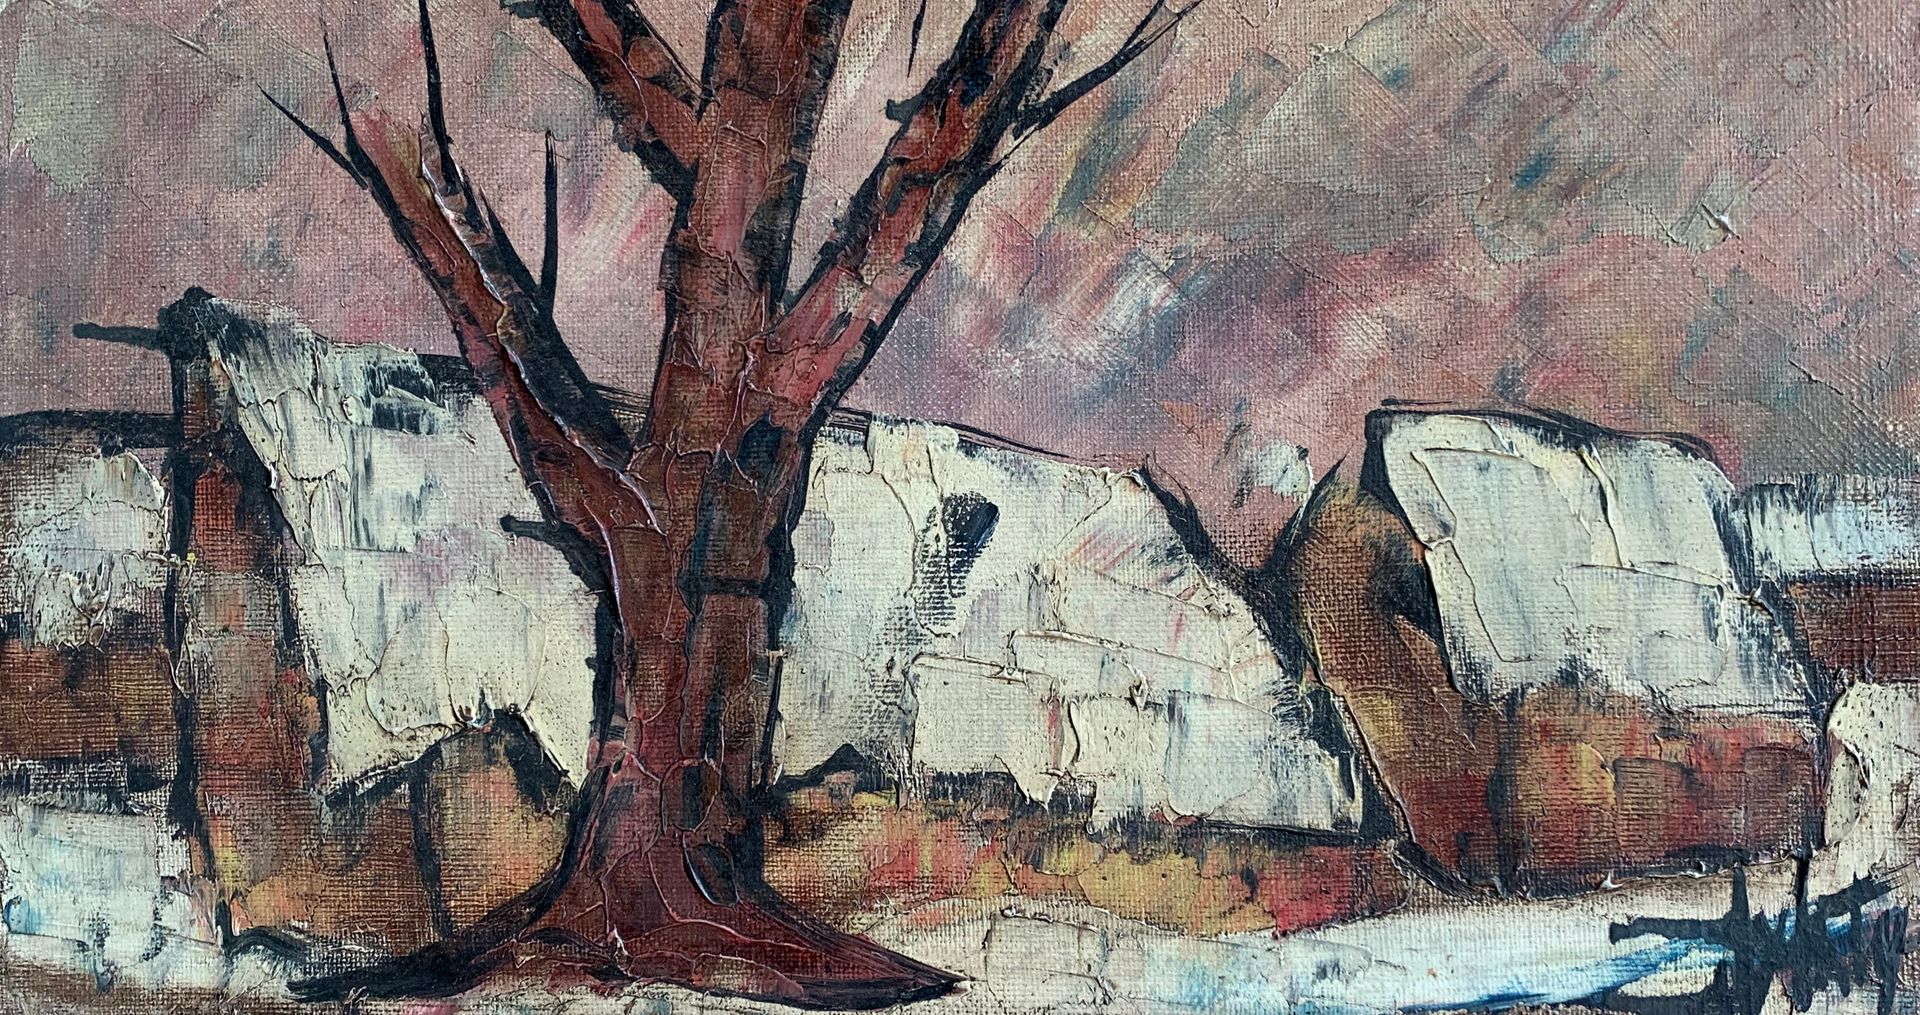 Null 亨利-莫里斯-丹提(Henry Maurice D'ANTY) (1910-1998)

冬天的树

布面油画，右下角有签名

18 x 33厘米。